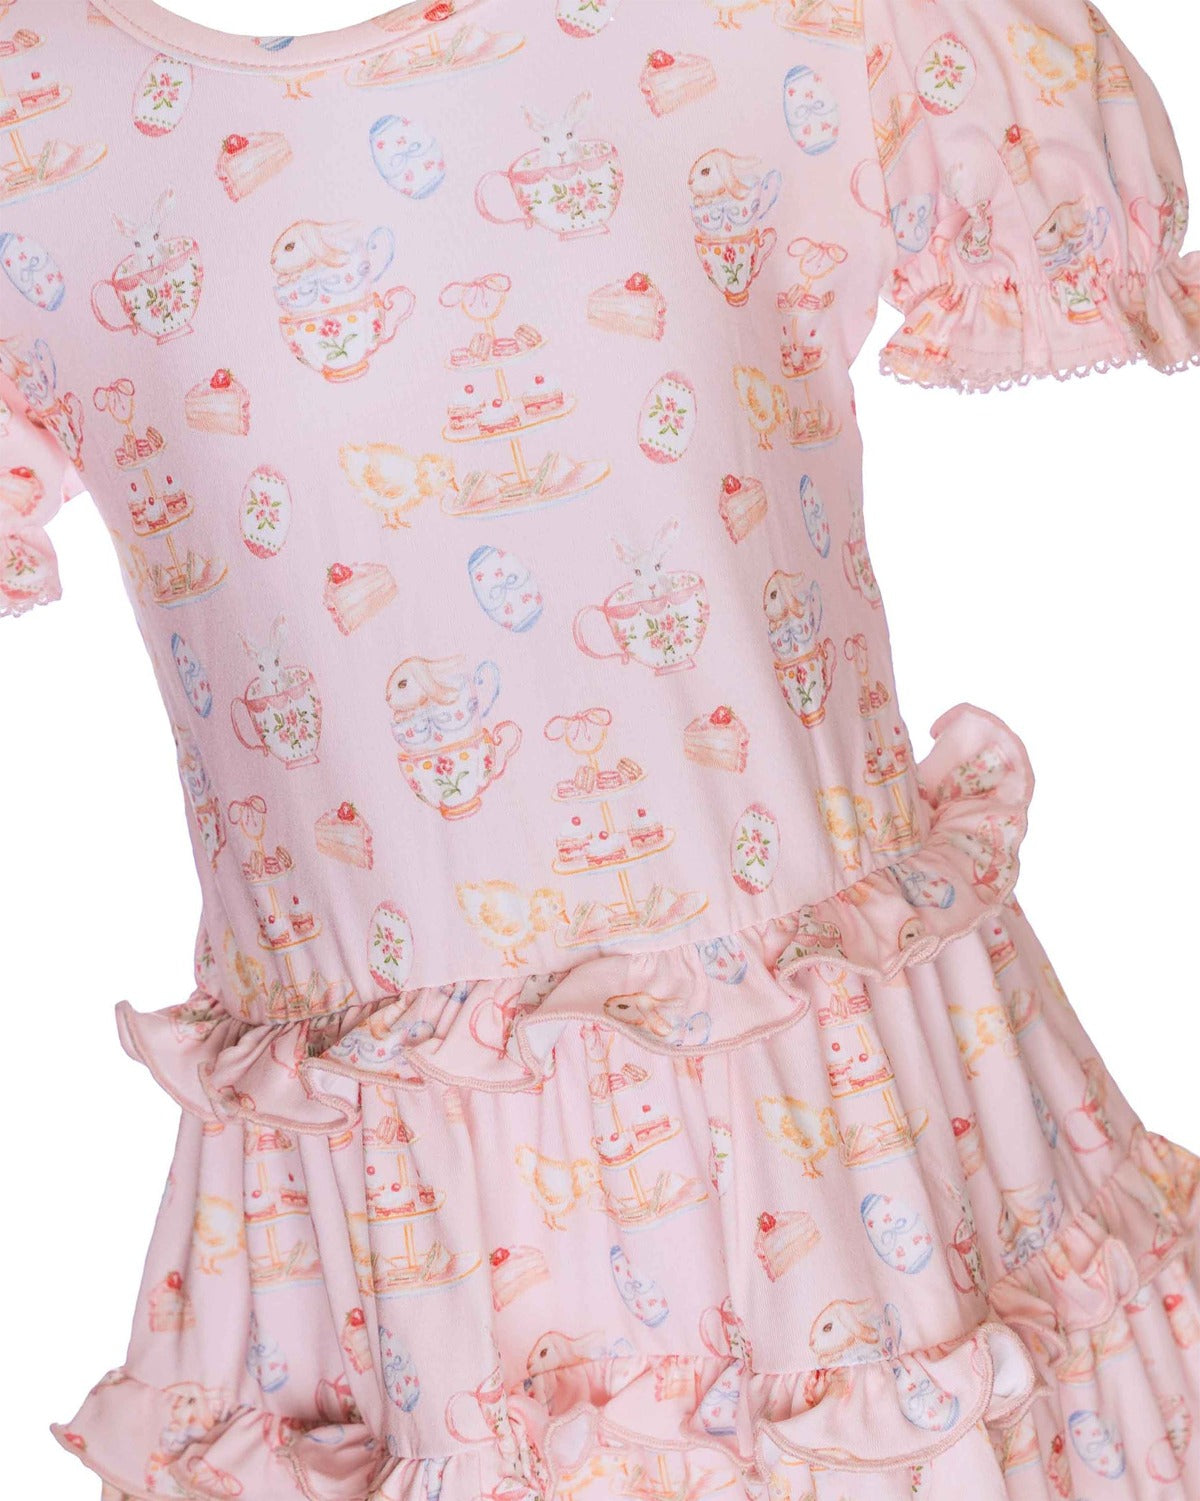 Bunny Tea Party Knit Ruffle Dress- FINAL SALE